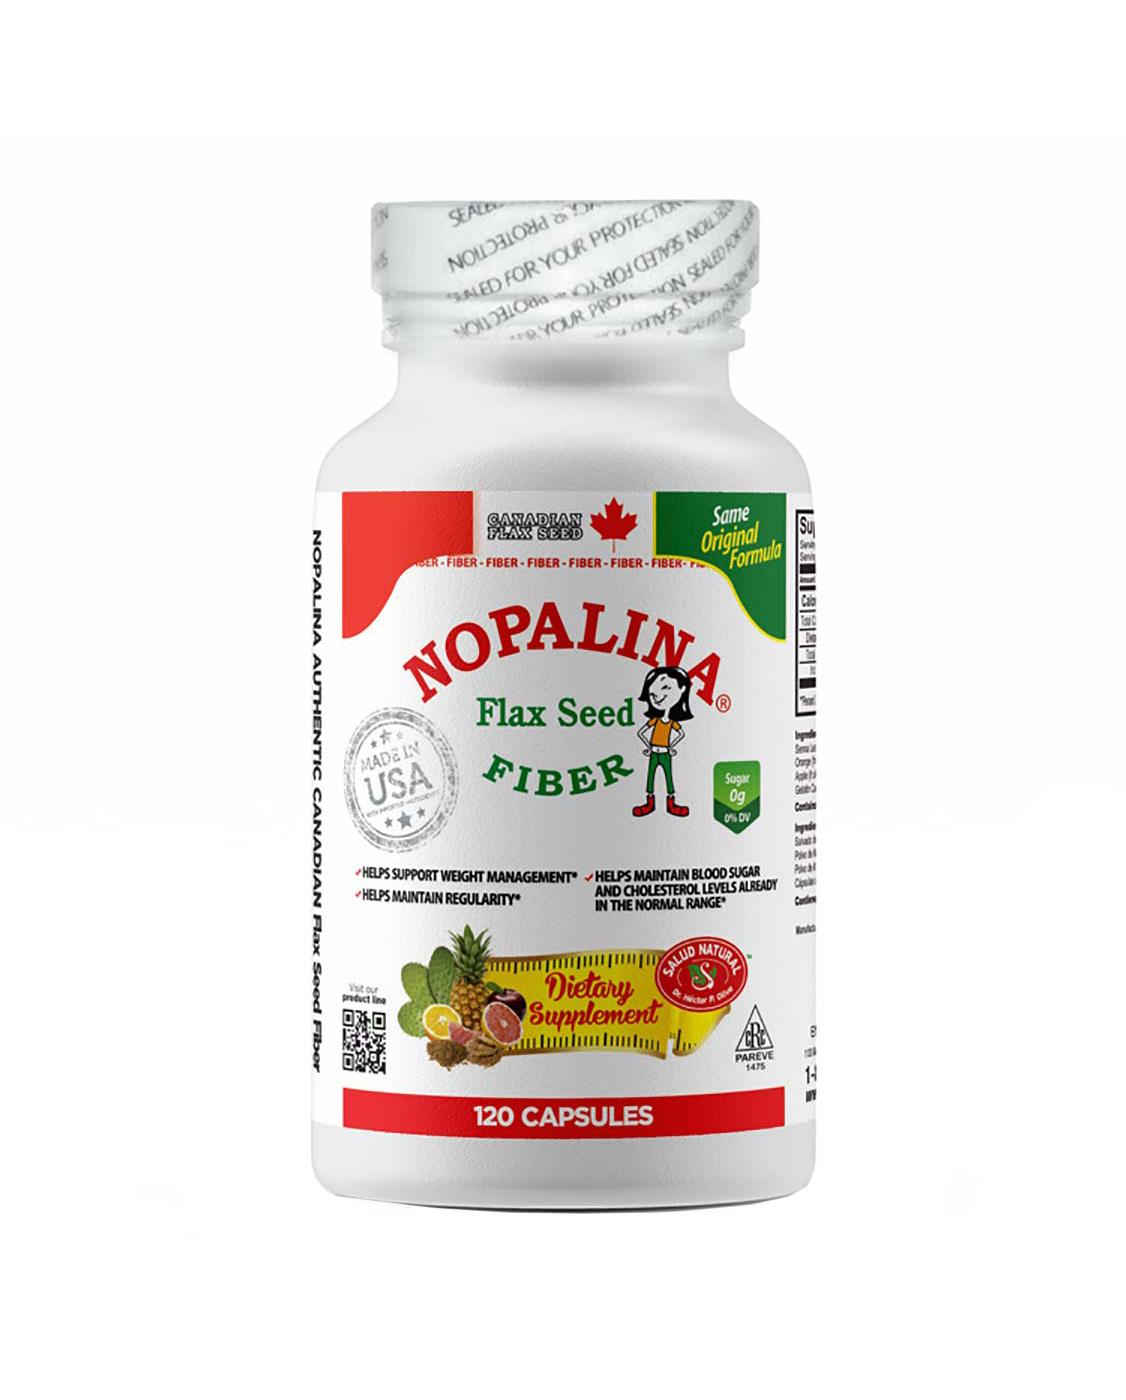 Nopalina Flax Seed Plus Formula Capsules; image 1 of 2